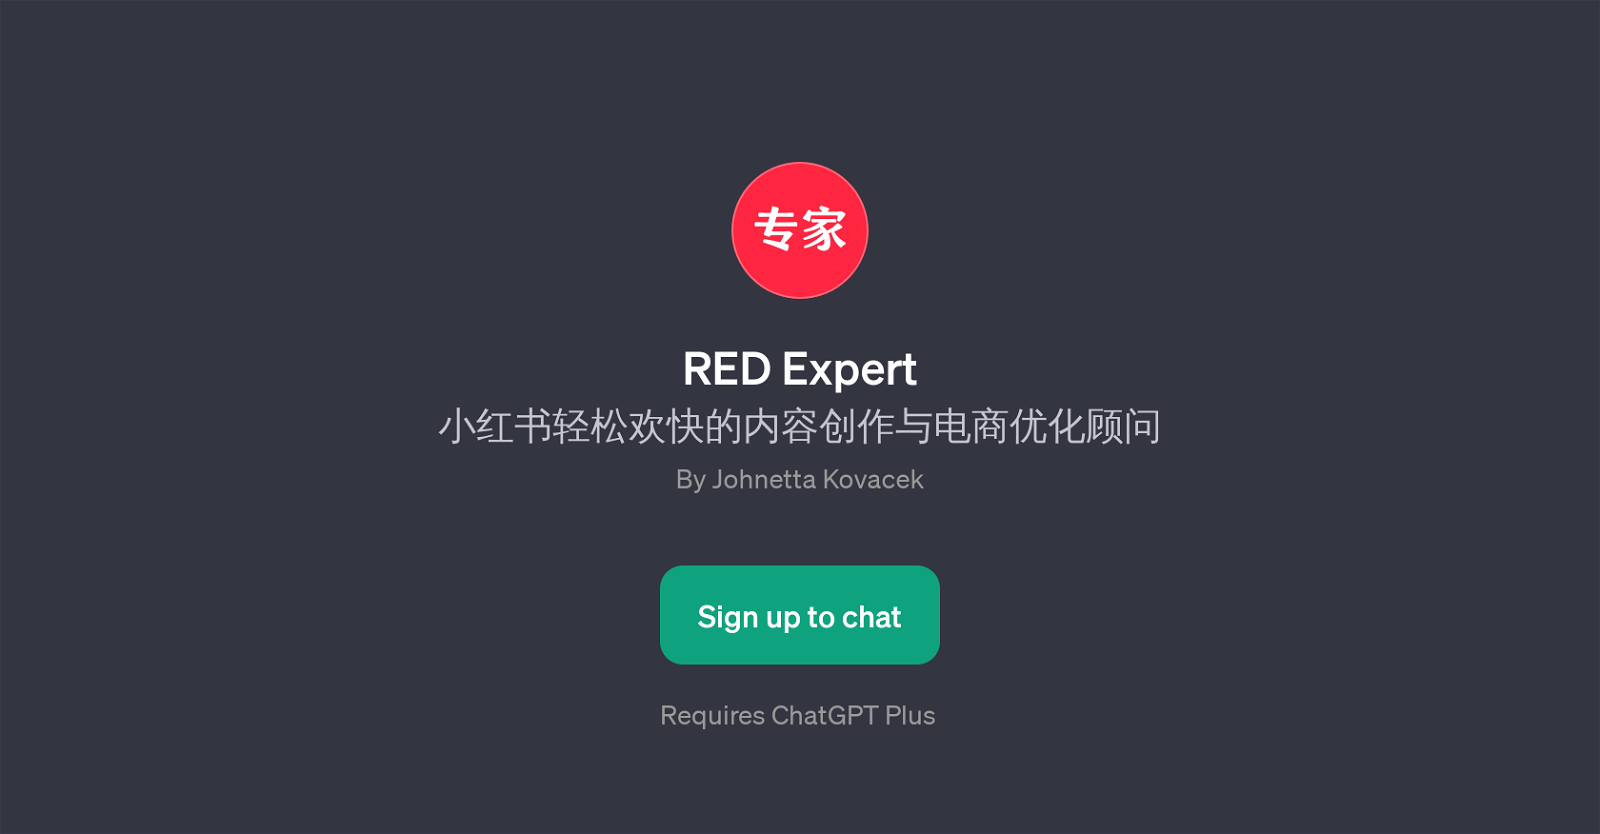 RED Expert website